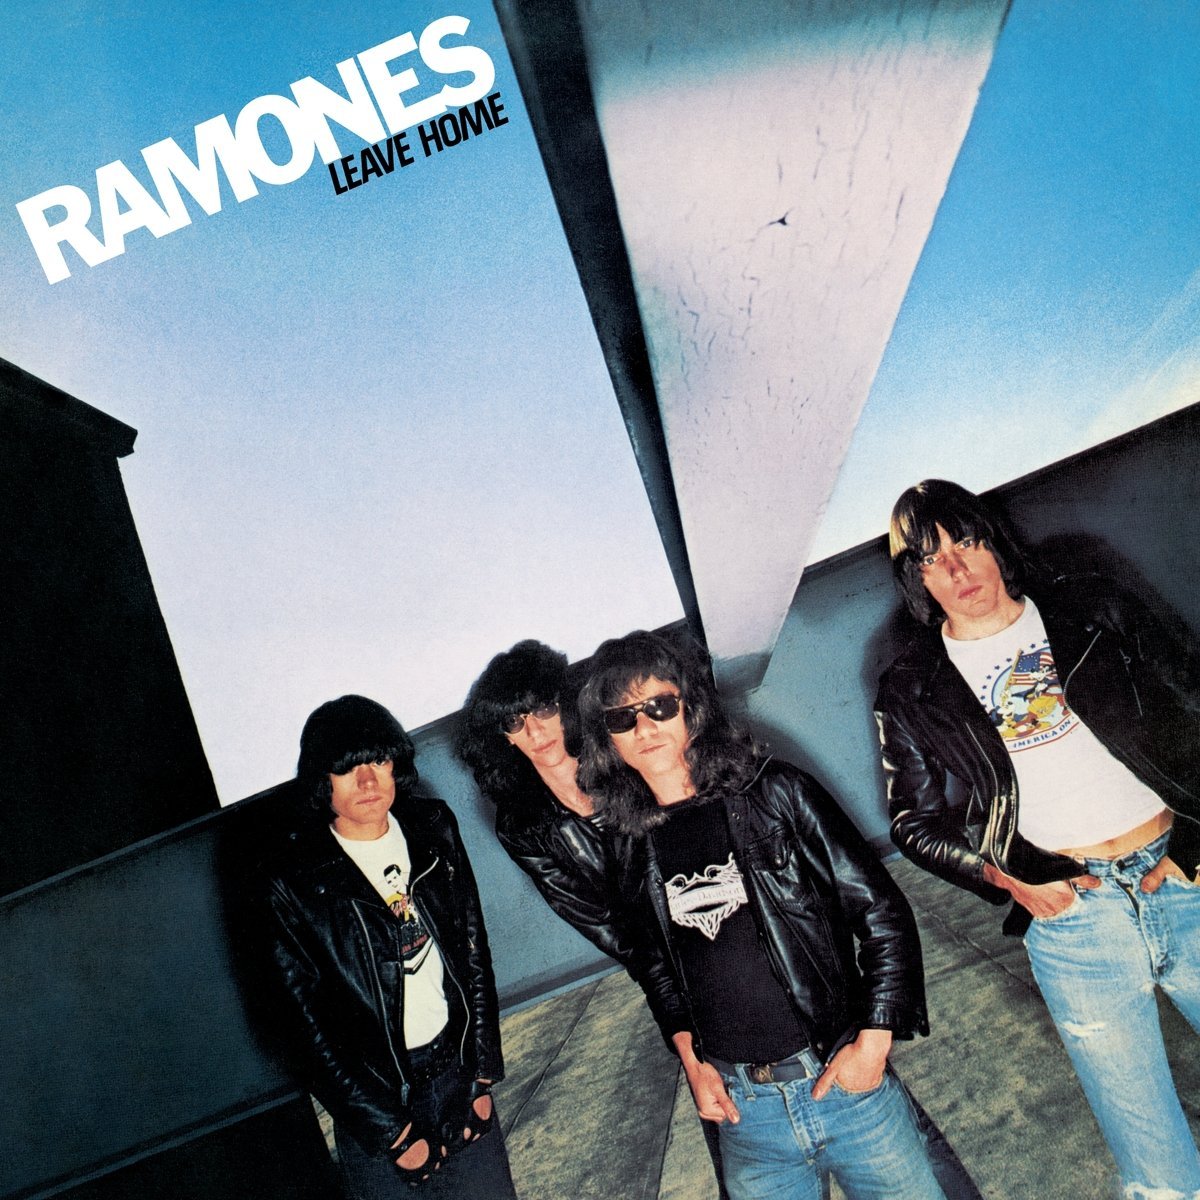 Leave Home | Ramones image11